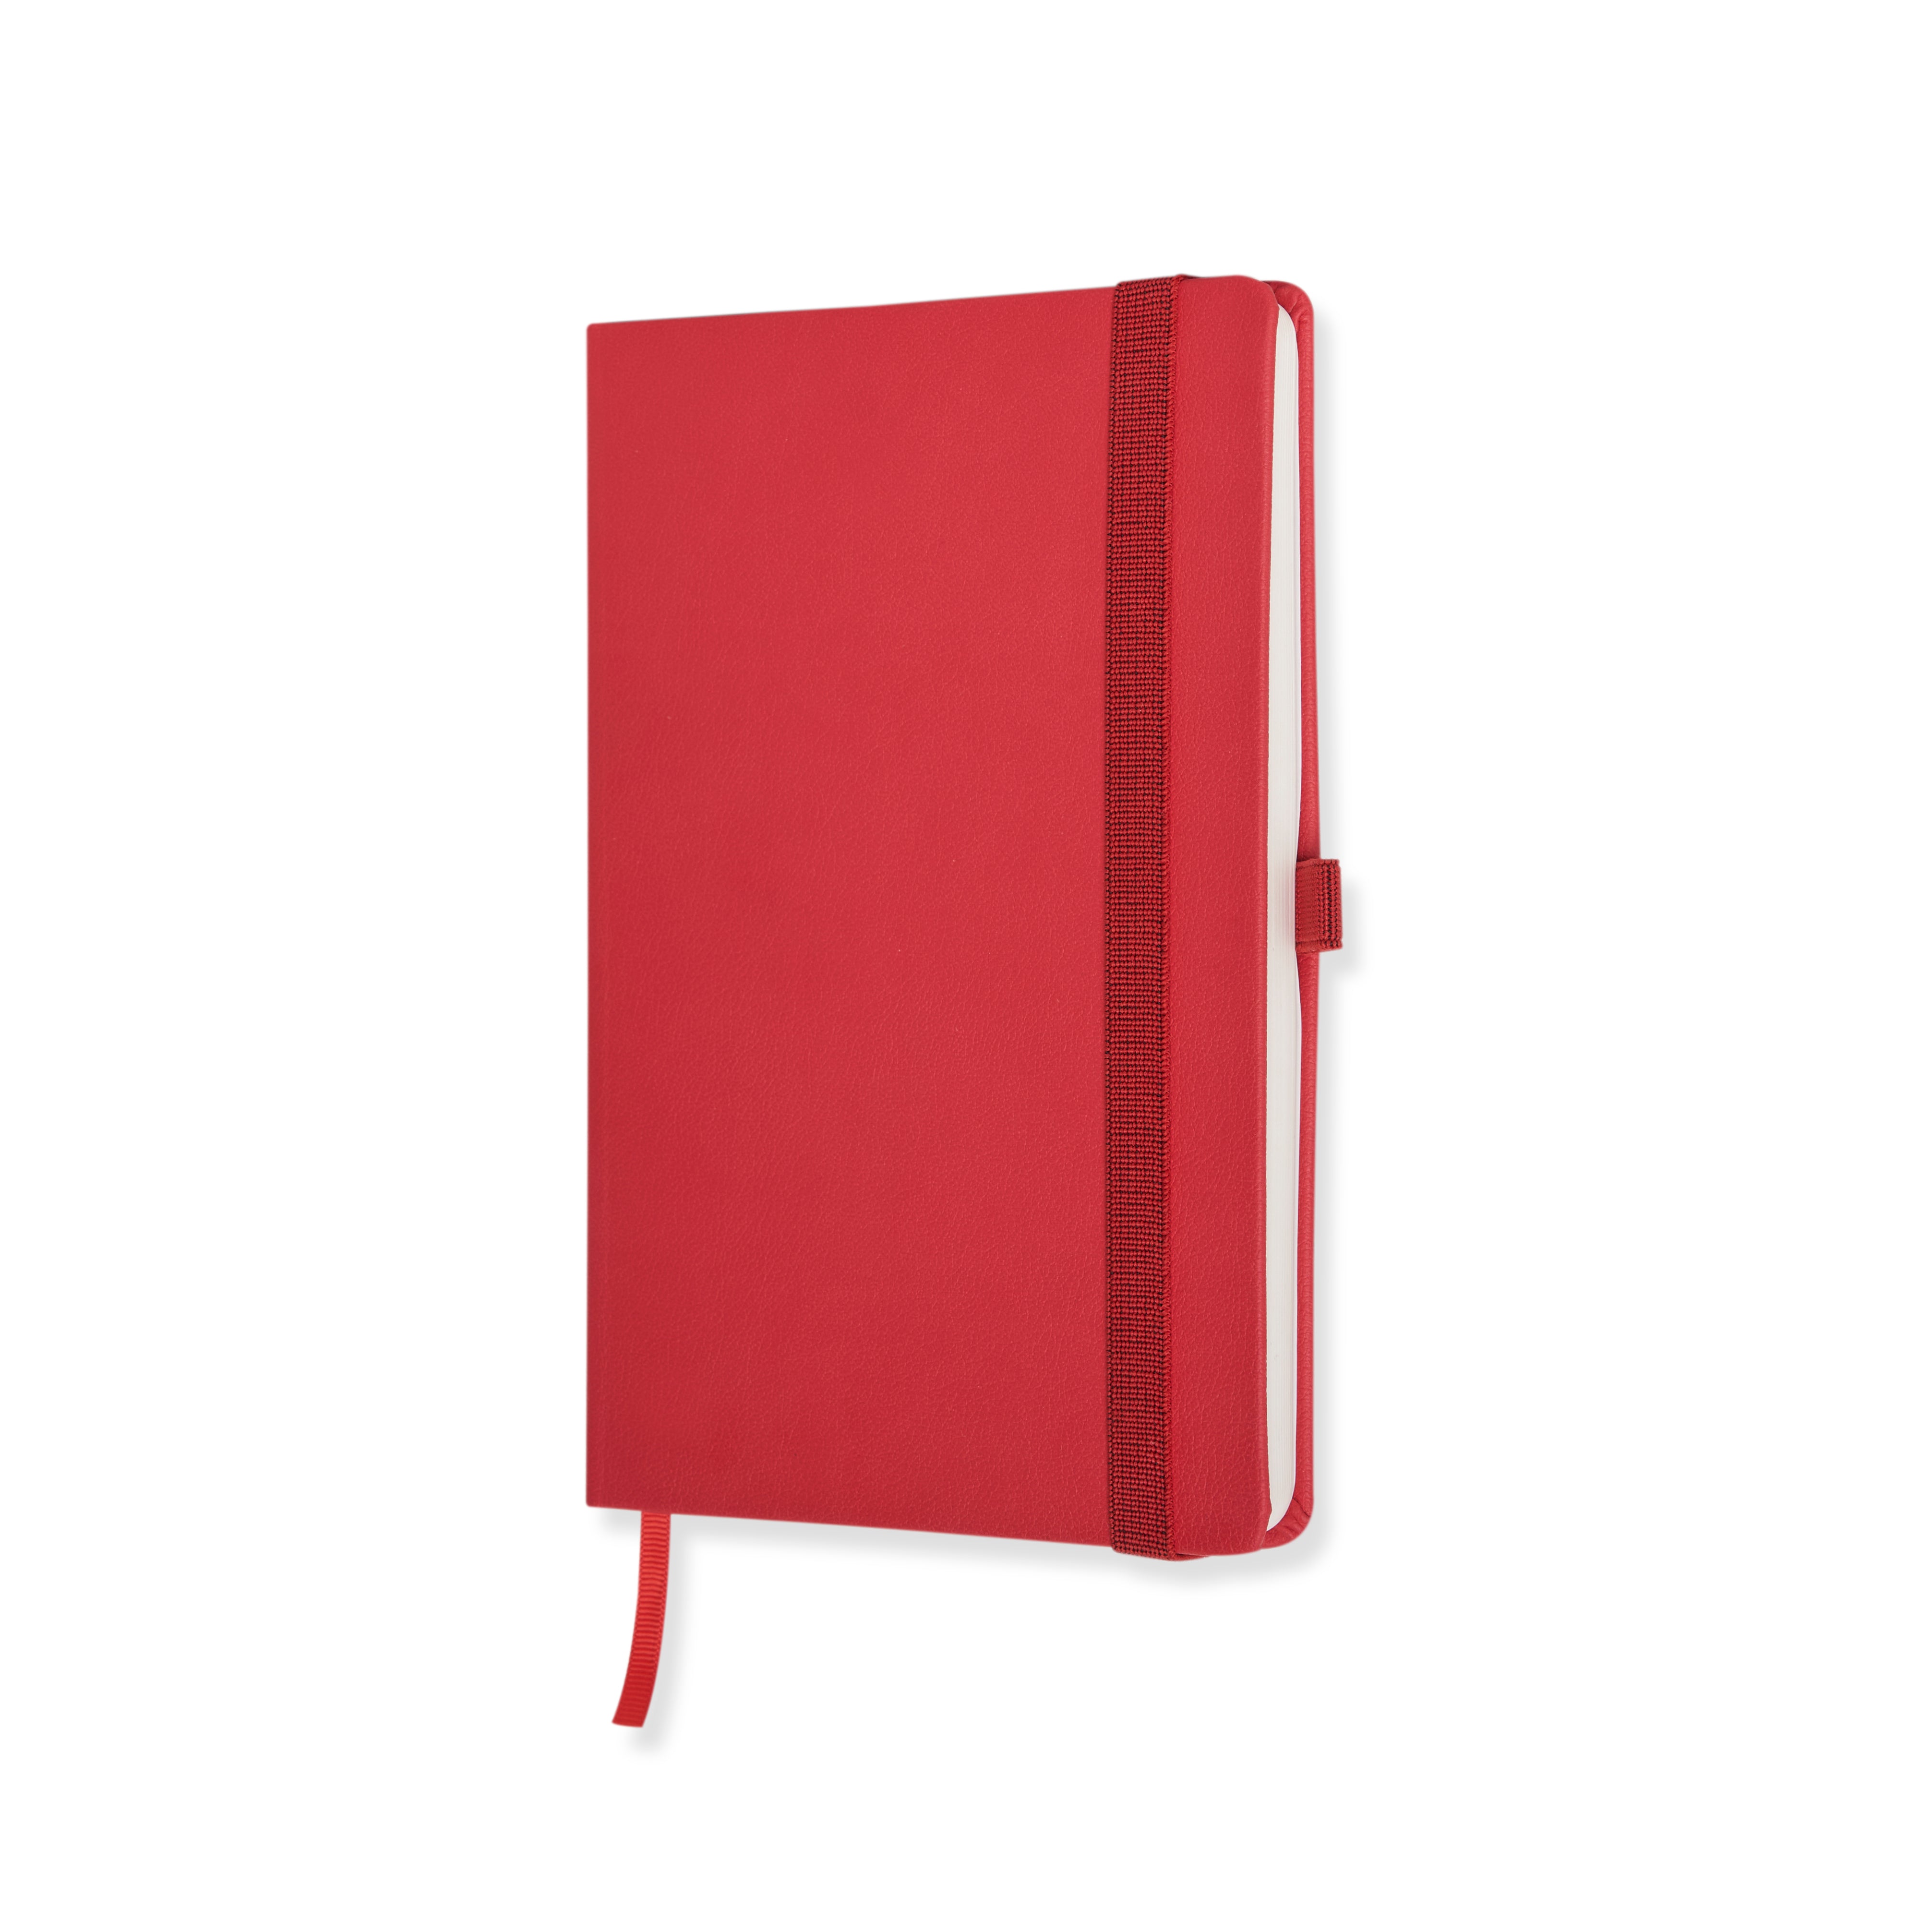 Doodle Apex Executive A5 PU Leather Hardbound Diary - Red